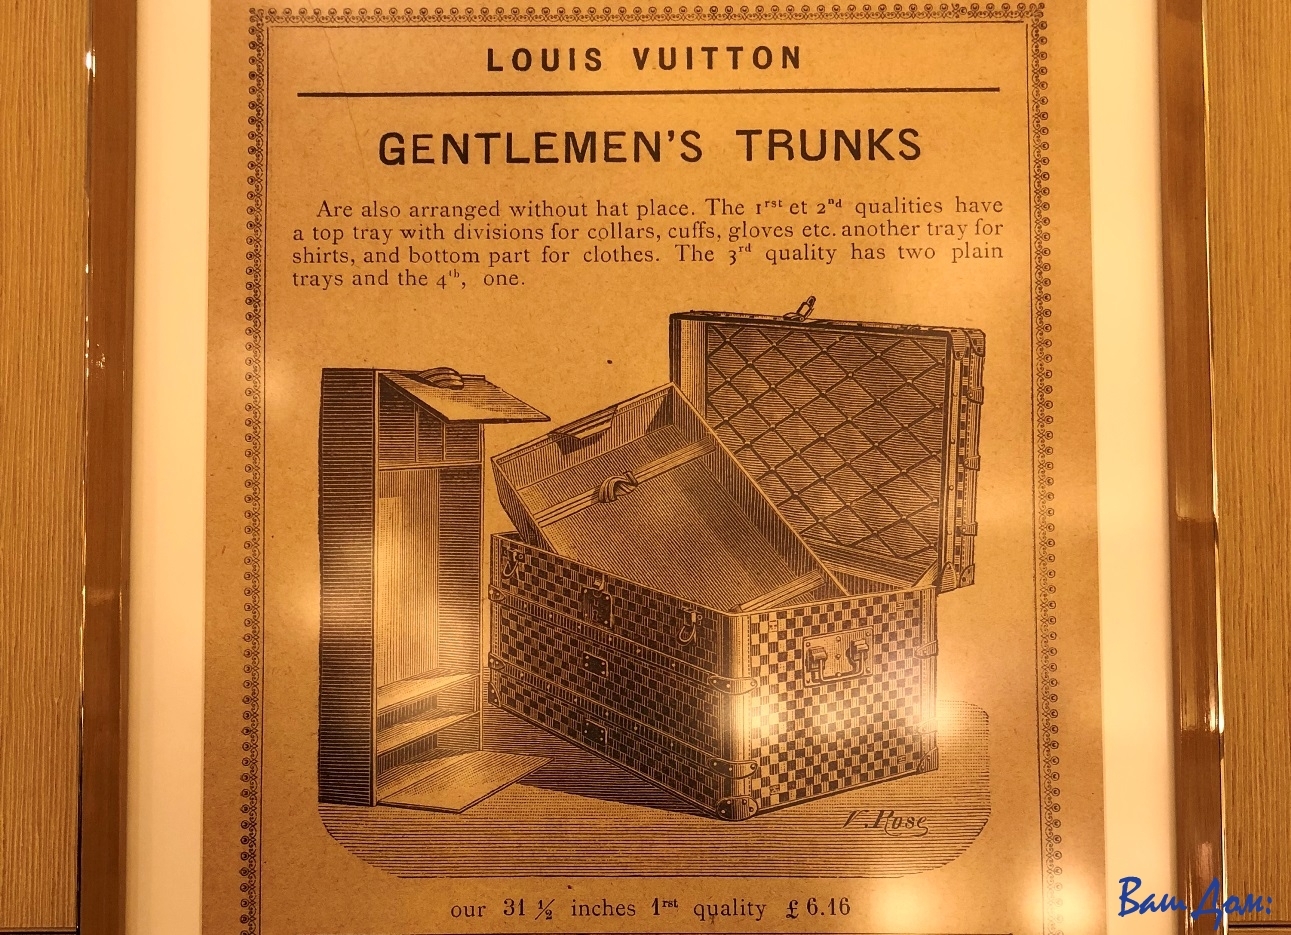 Louis Vuitton IMG_0008 - Copy